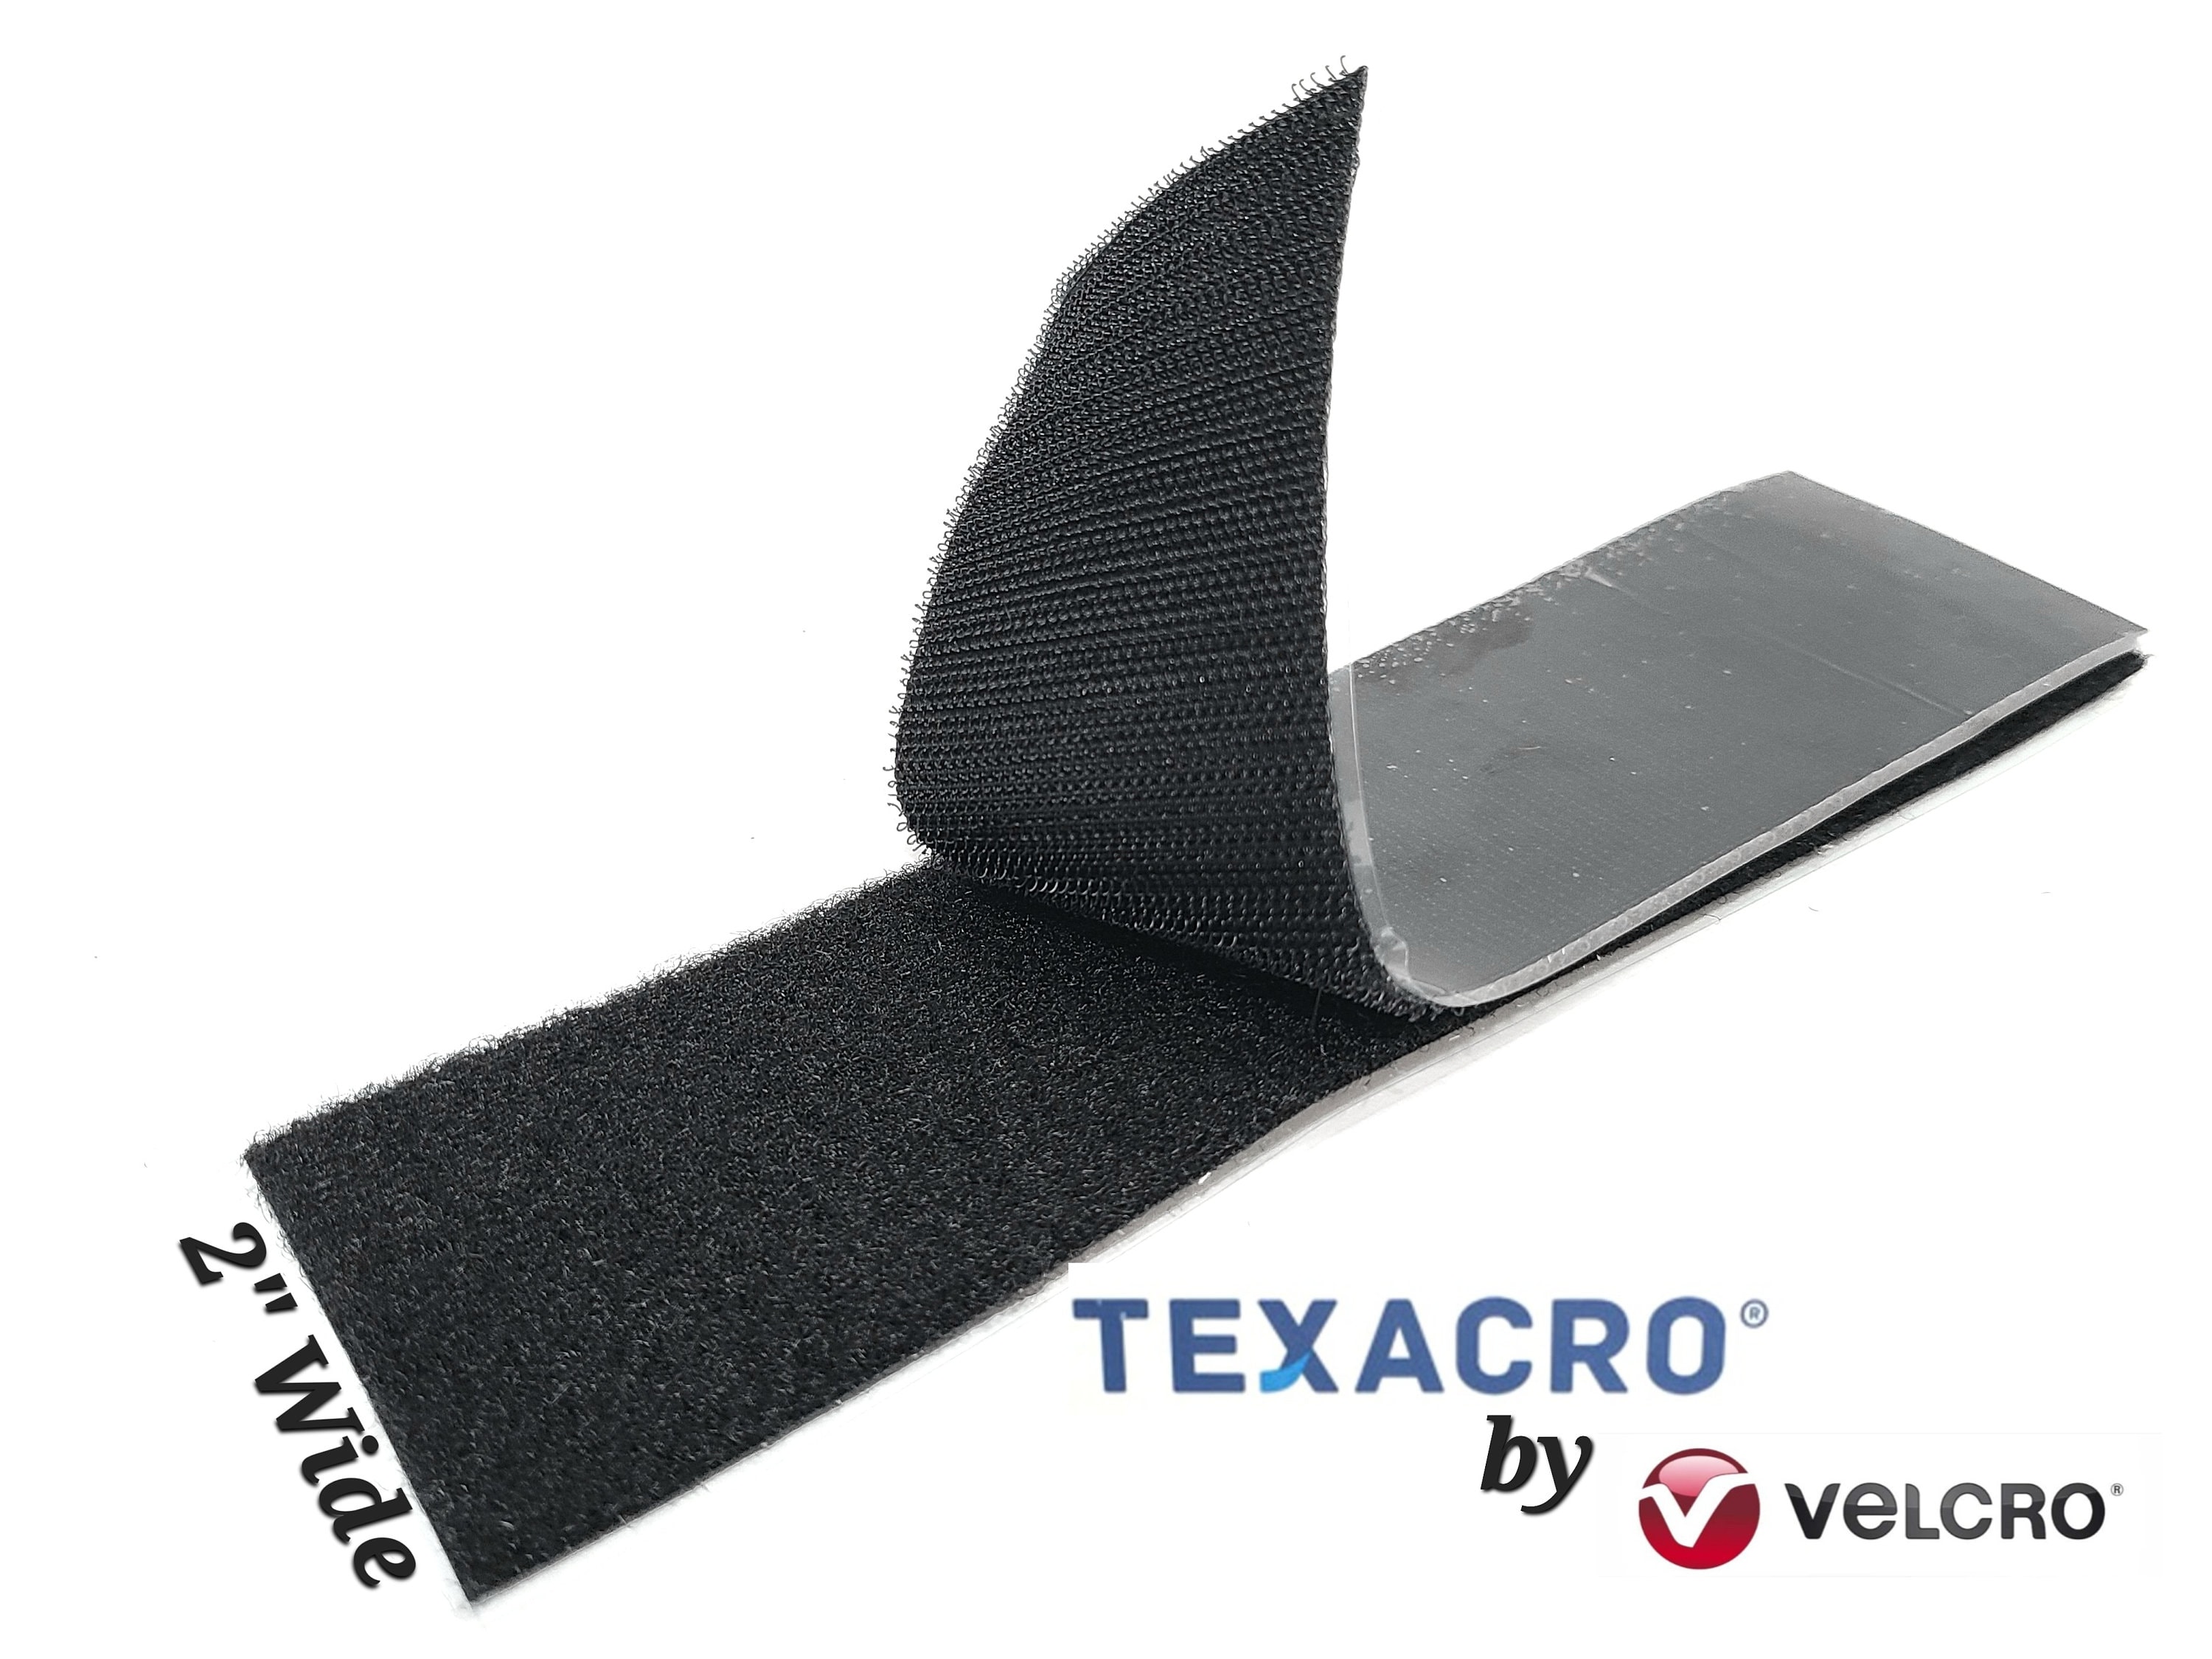 10cm's of 50mm wide White Texacro (Velcro) - HOOK only